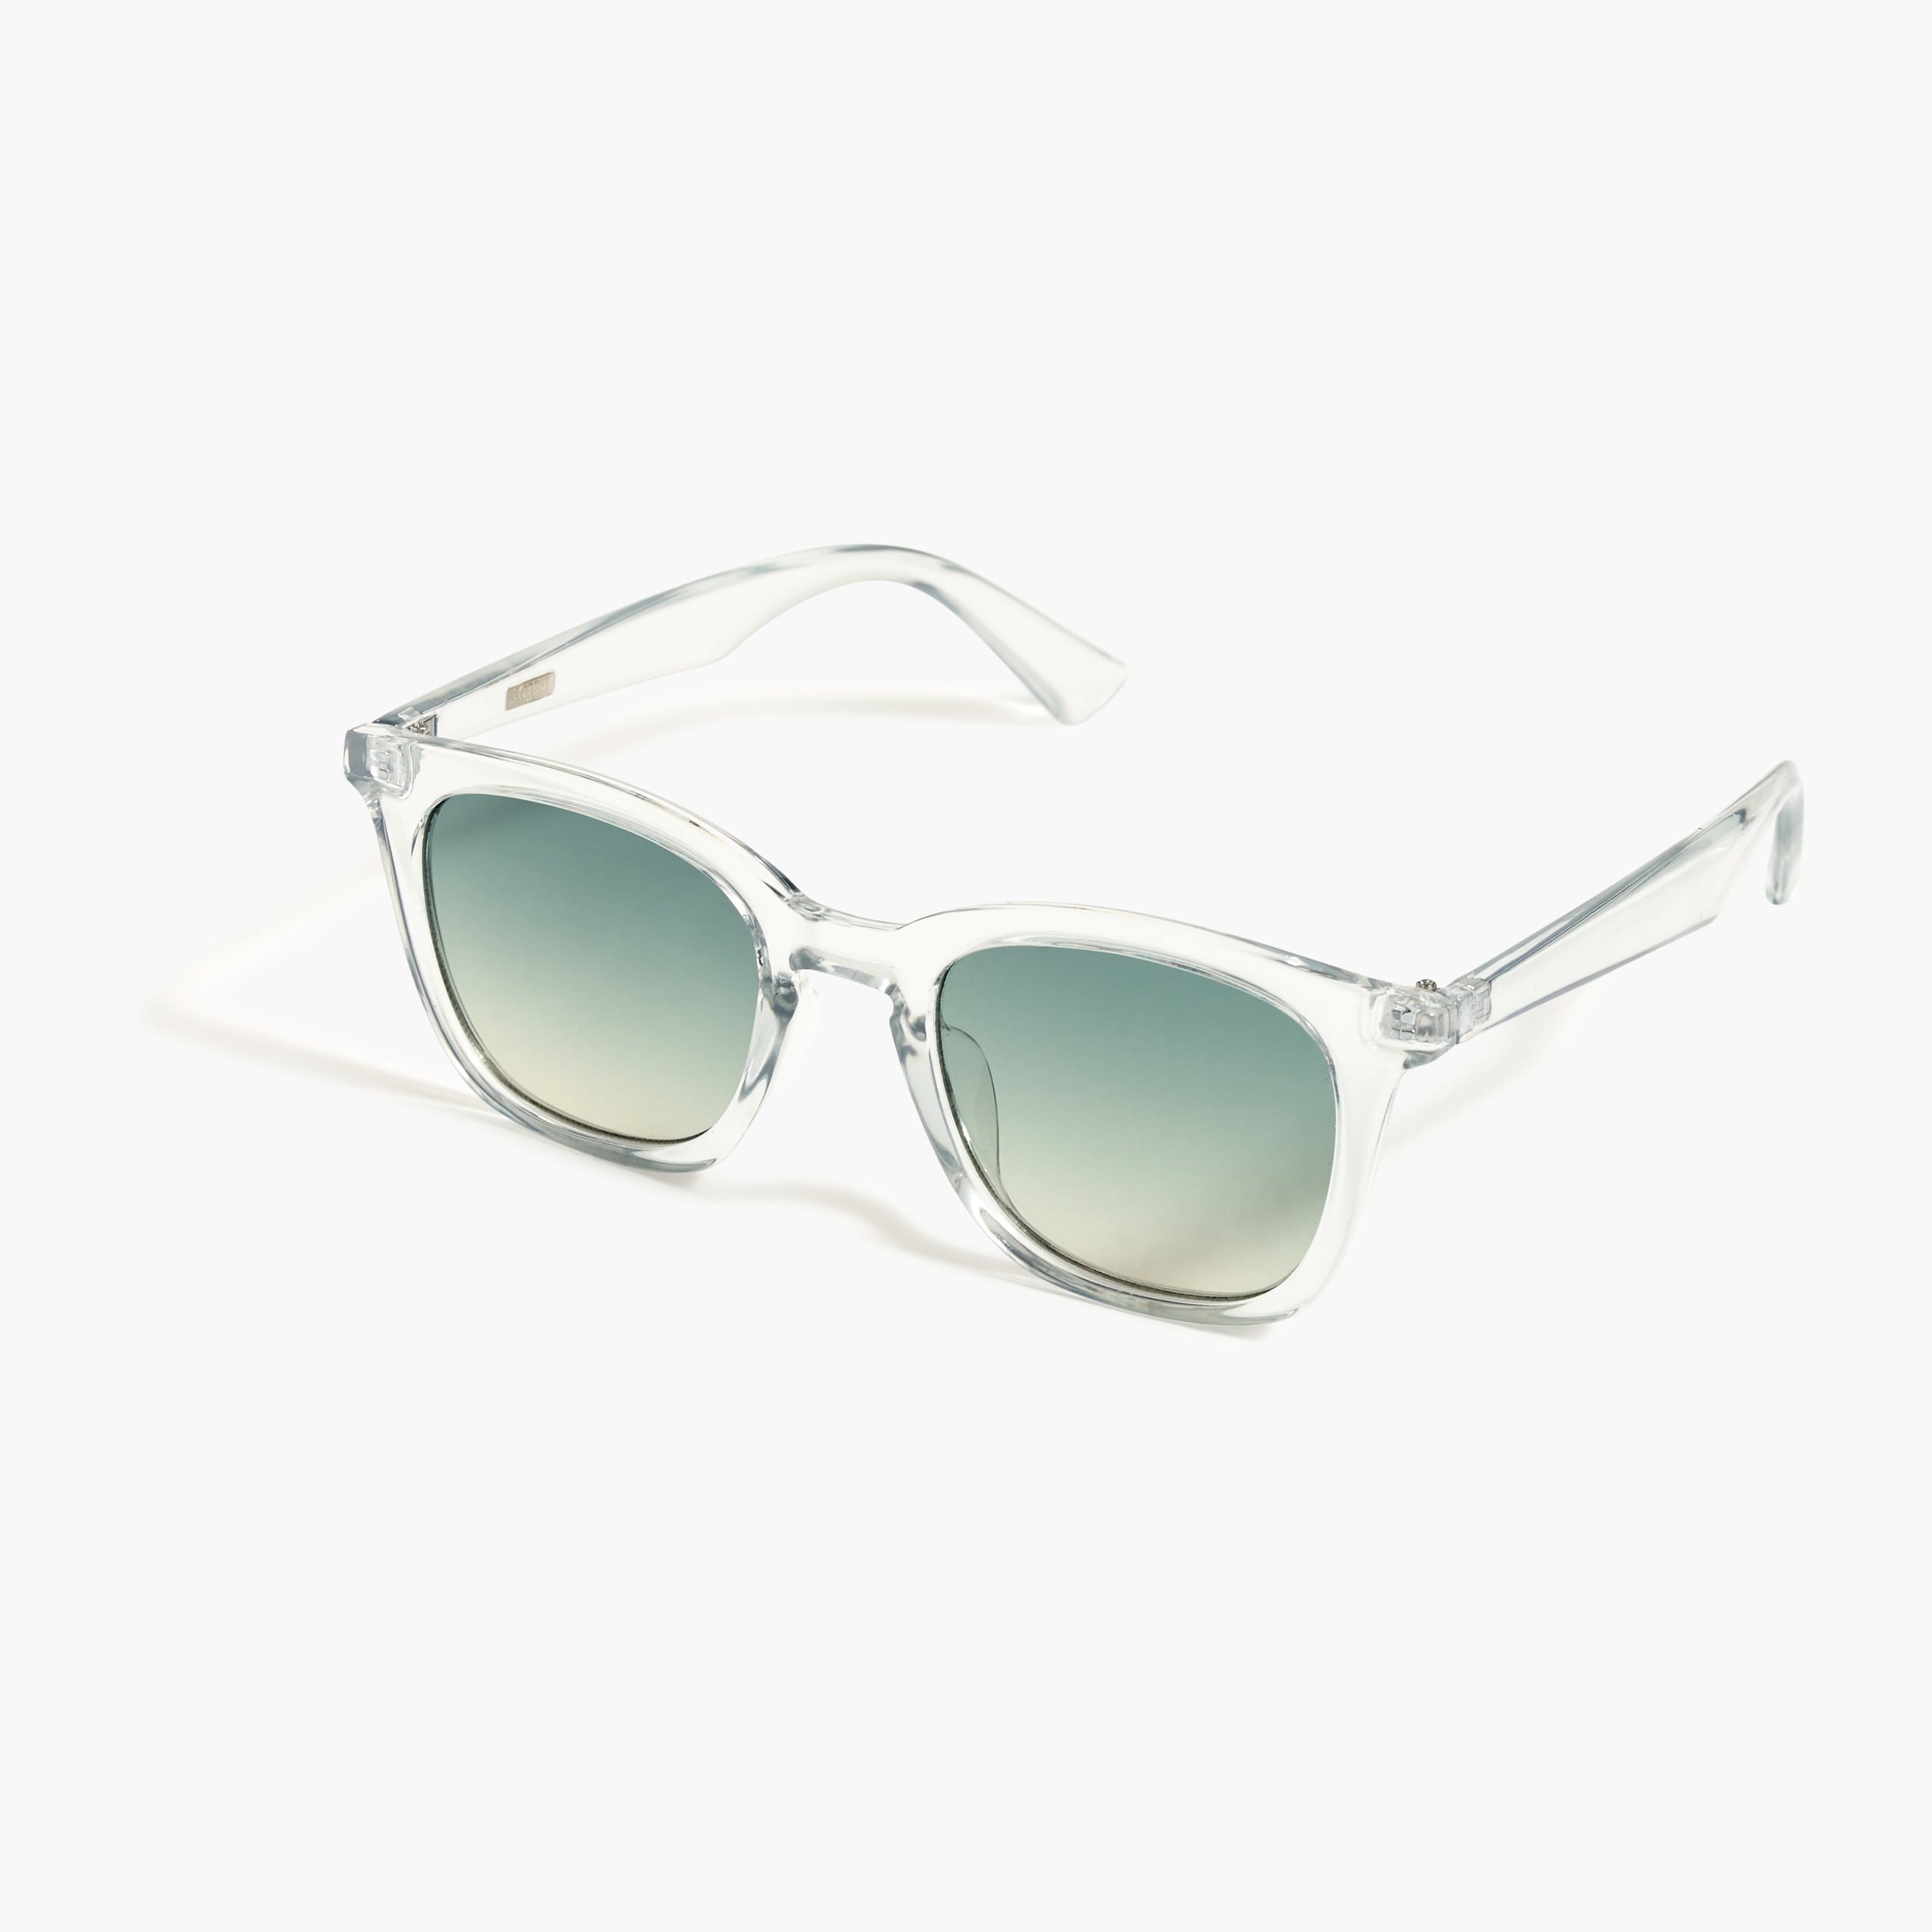 Jcrew Clear square-frame sunglasses